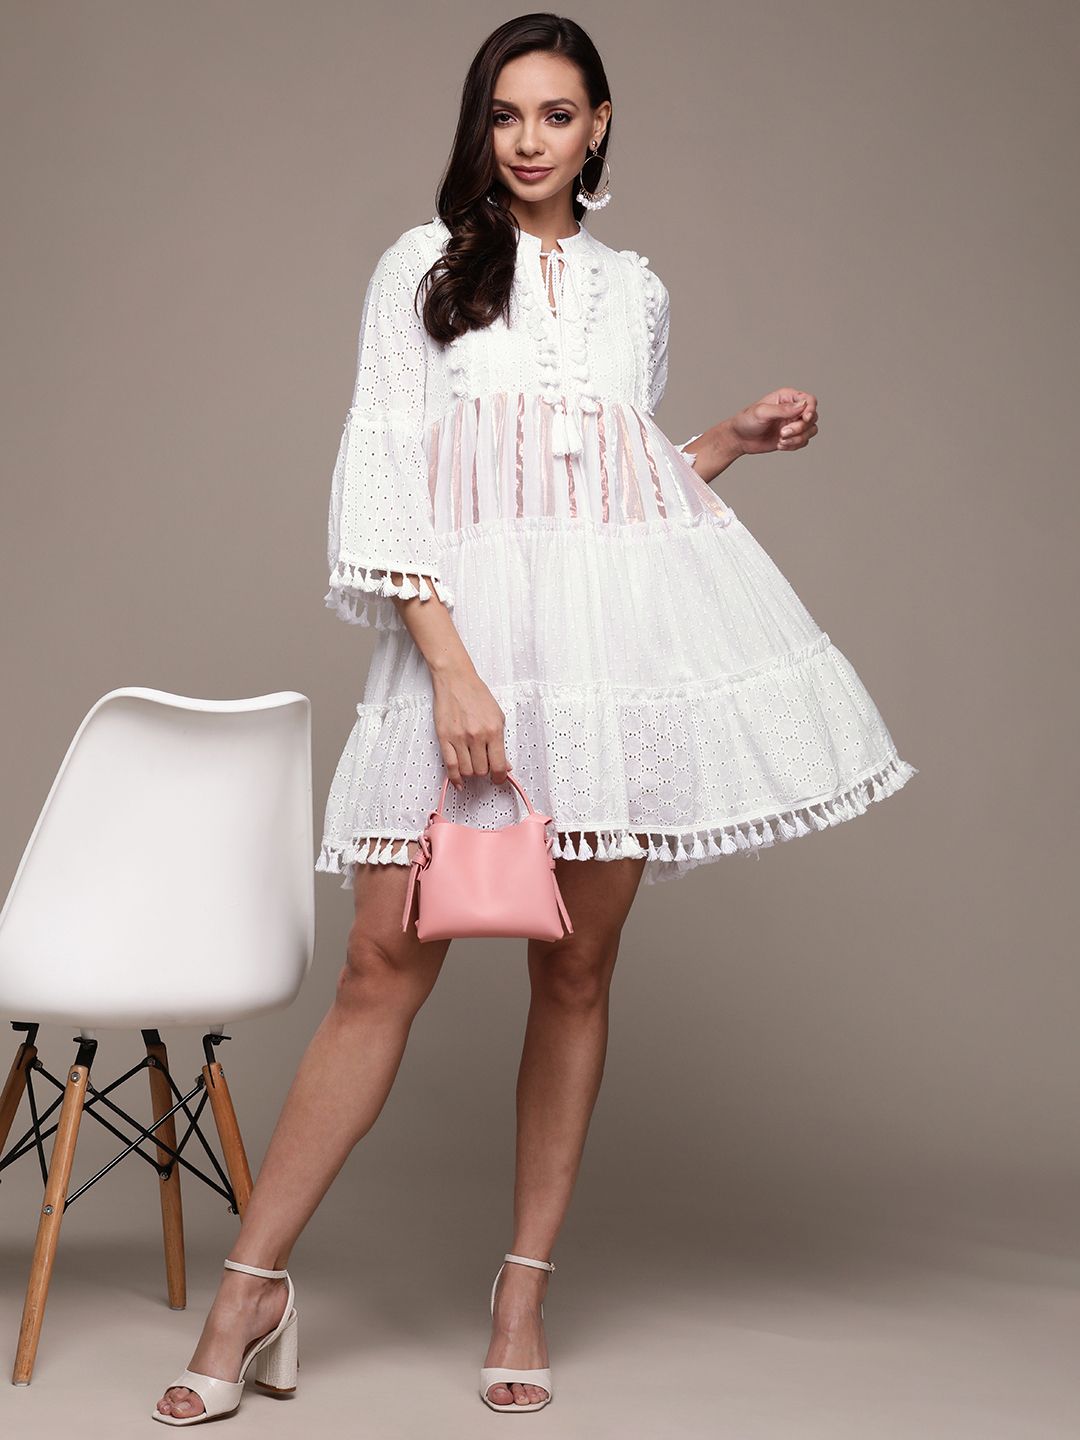 Ishin White Schiffli Embroidered Cotton A-Line Dress Price in India